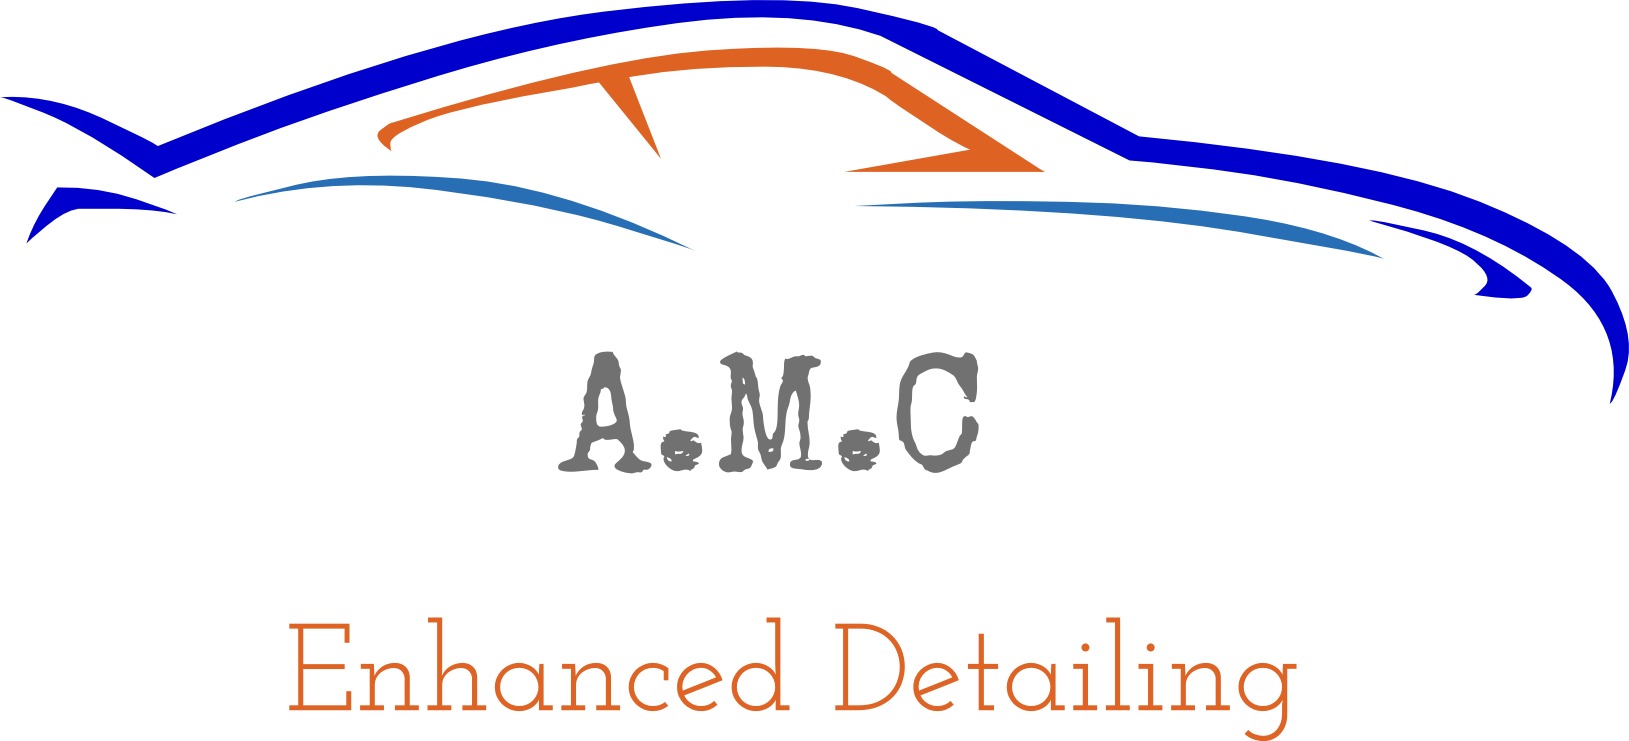 Business Profile: AMC Enhanced Detailing